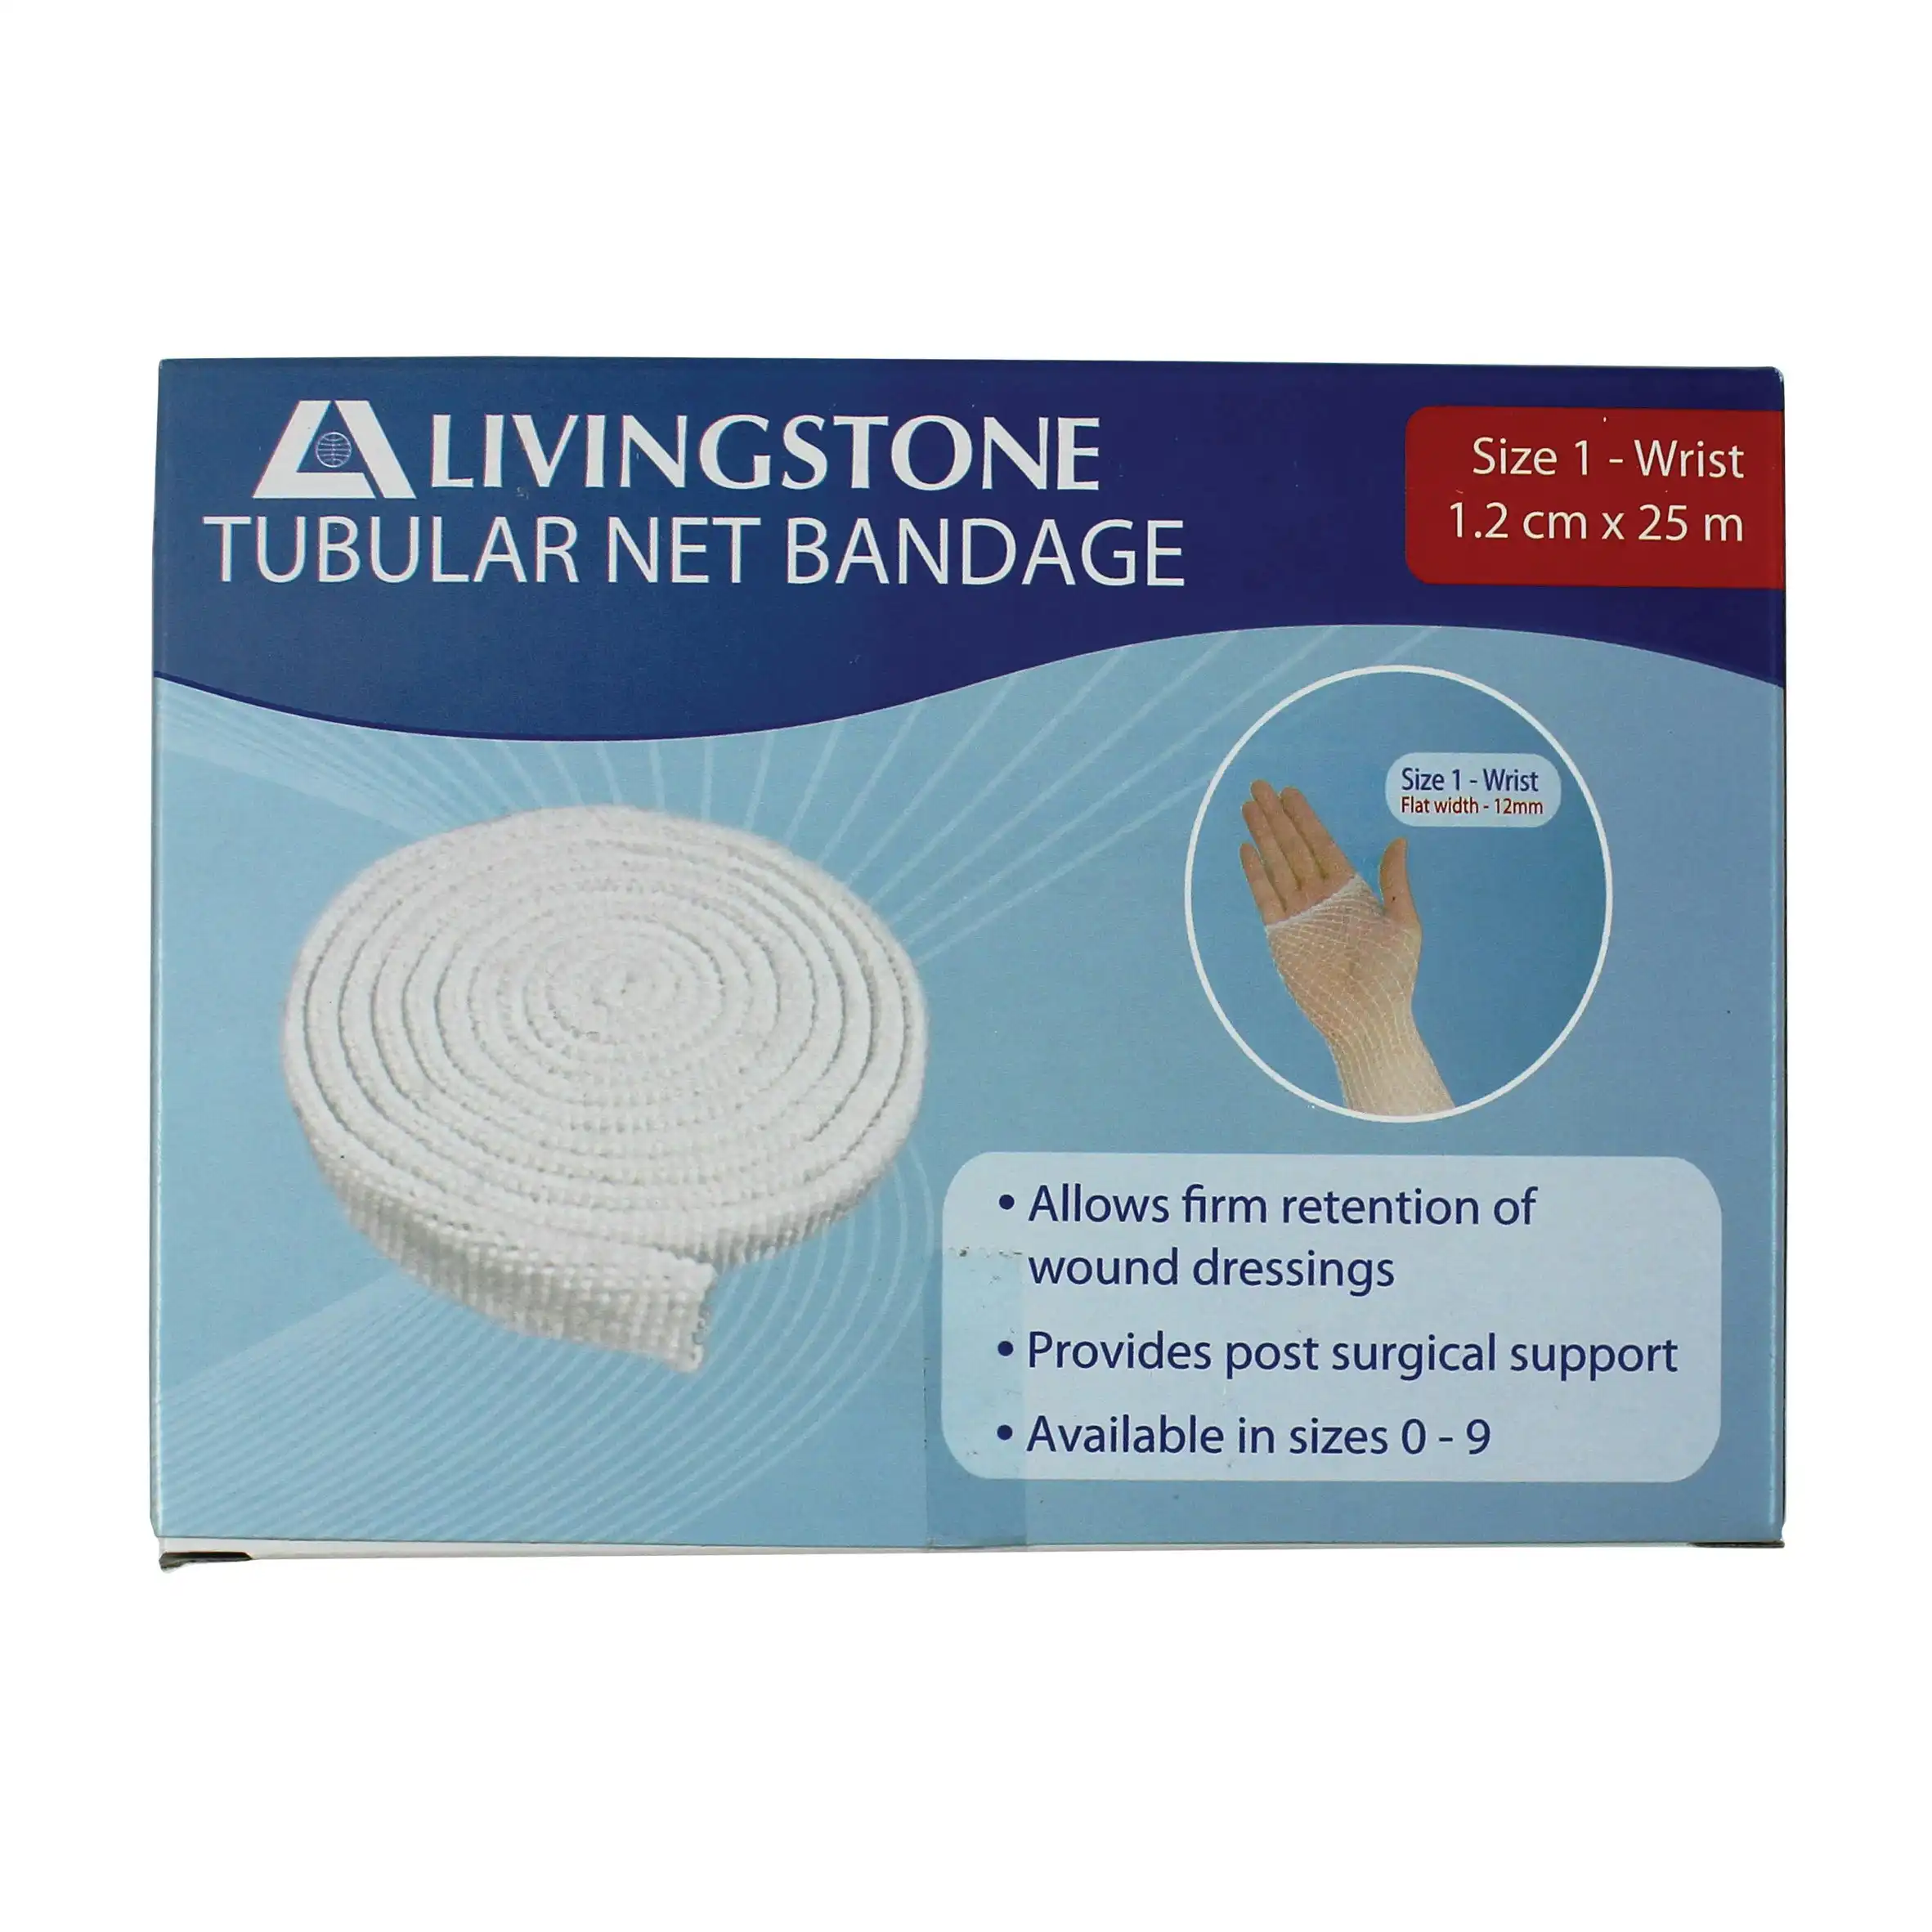 Livingstone Tubular Net Bandage Size B, No. 1, Wrist, Flat Width: 12mm, 7.5 metres (unstretched), 25 metres (stretched)/Bag x3